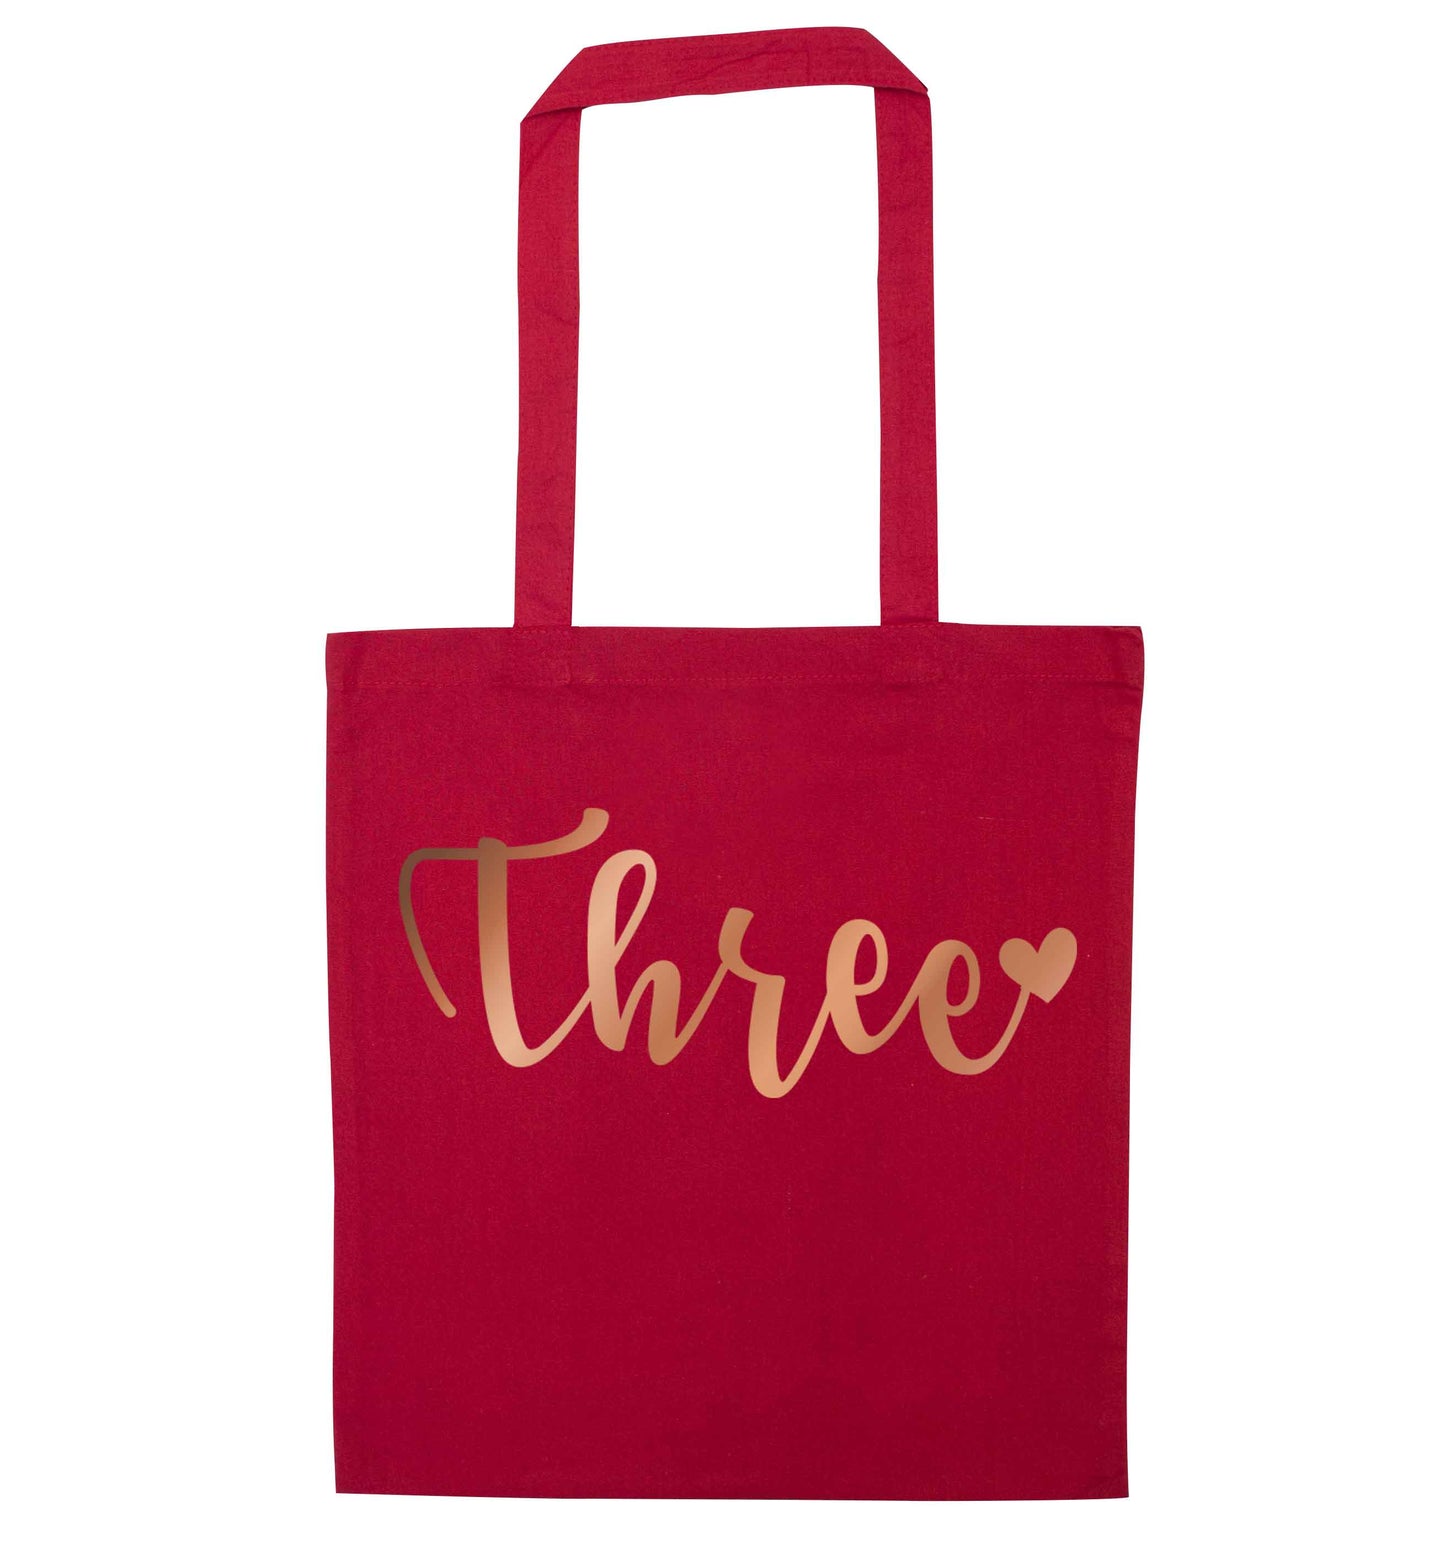 Three rose gold red tote bag